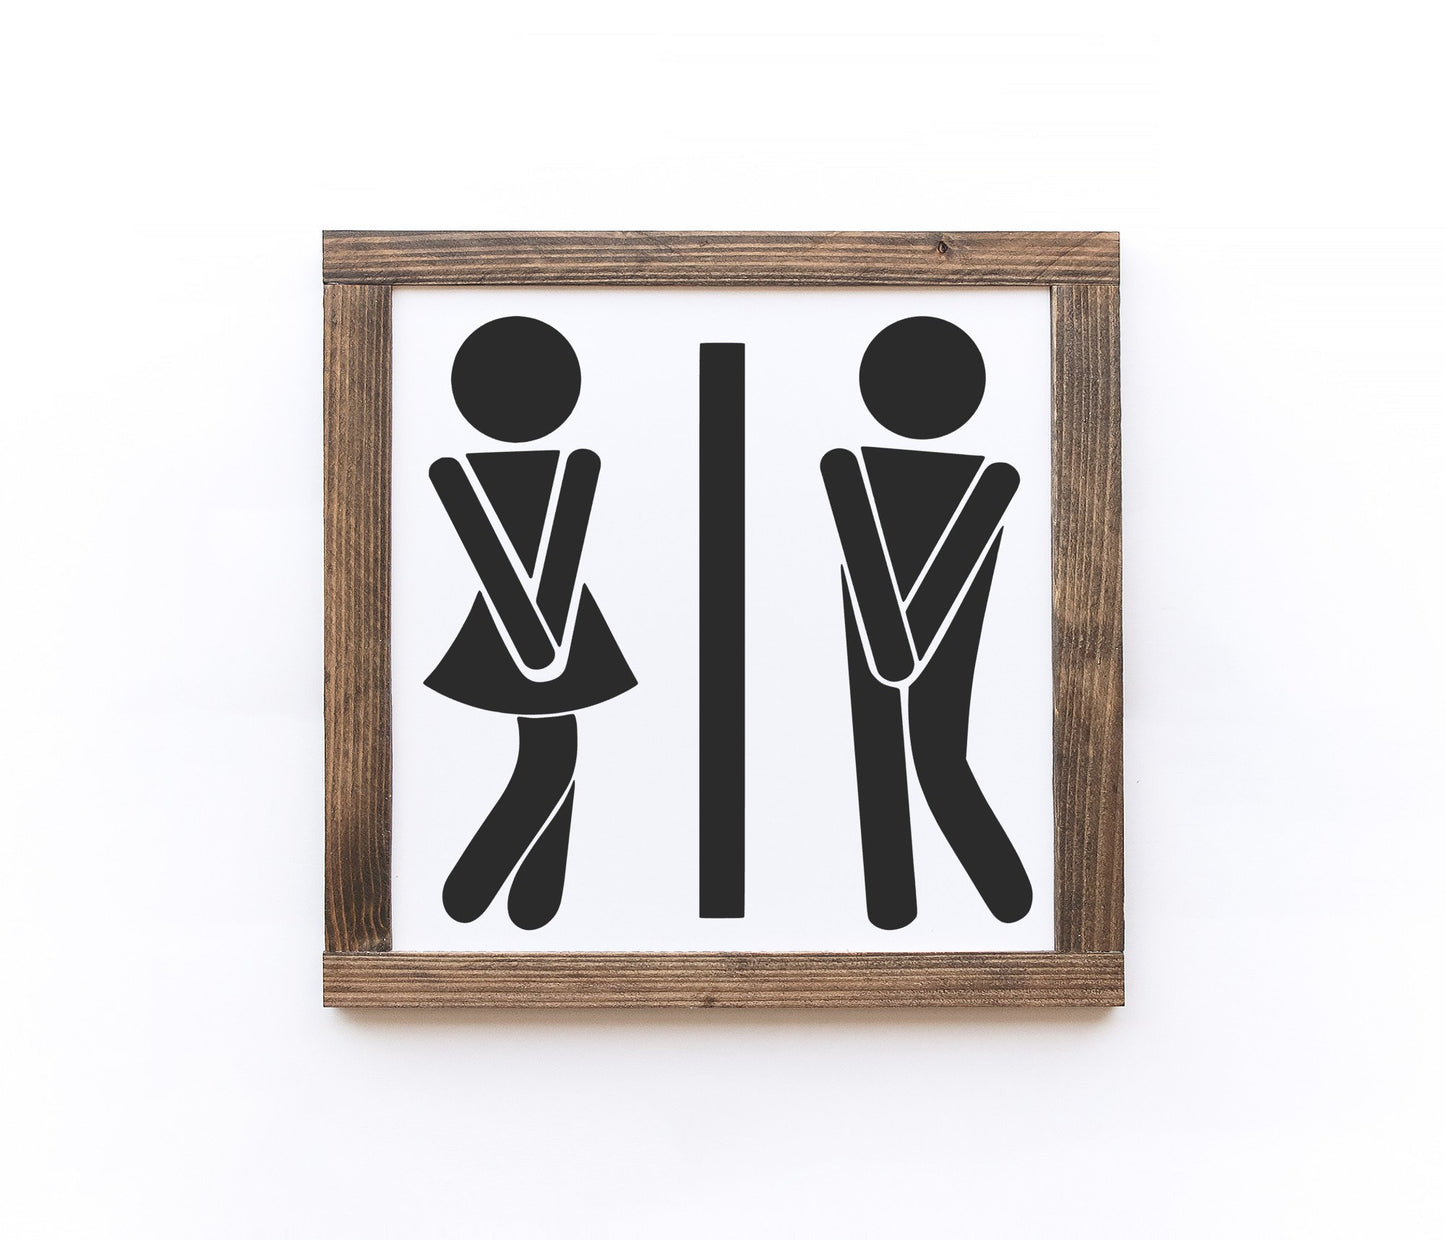 Bathroom Wood Signs